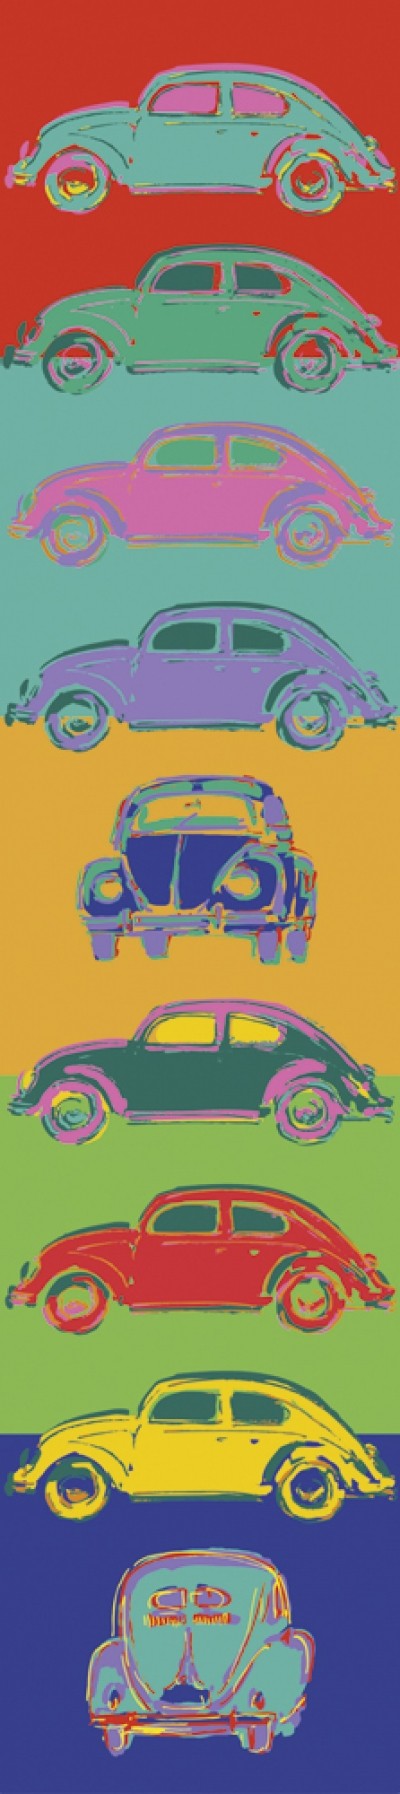 Rod Neer, VW Käfer Variation (Käfer, VW, Volkswagen, Kultauto, Auto, Pop/Op Art, Pop Art, Kult, Vintage, Wohnzimmer, Jugendzimmer, Treppenhaus, bunt)